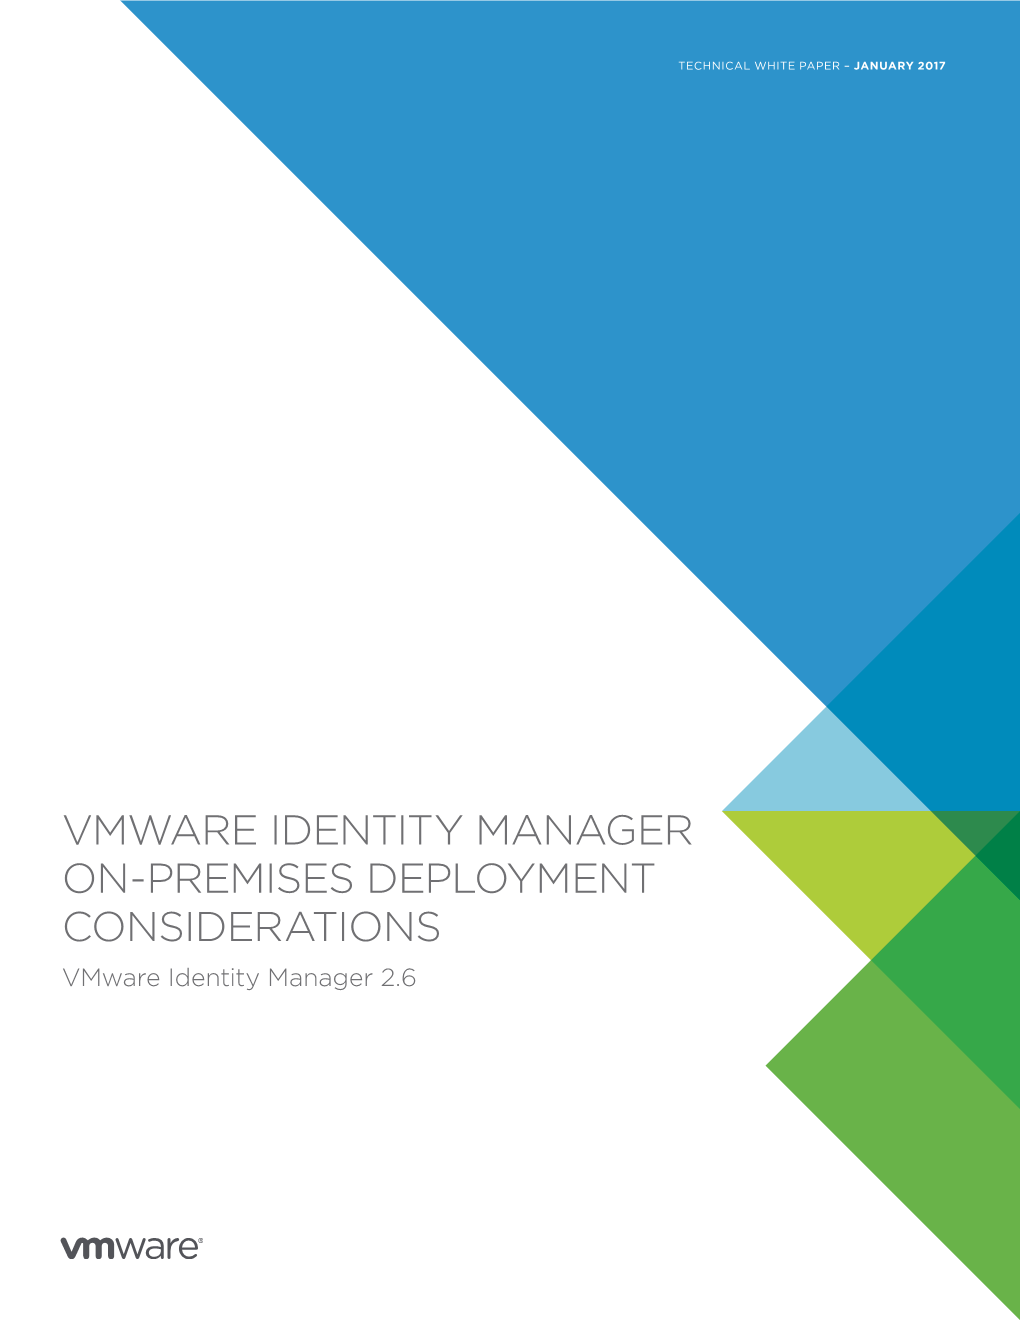 VMWARE IDENTITY MANAGER ON-PREMISES DEPLOYMENT CONSIDERATIONS Vmware Identity Manager 2.6 VMWARE IDENTITY MANAGER ON-PREMISES DEPLOYMENT CONSIDERATIONS